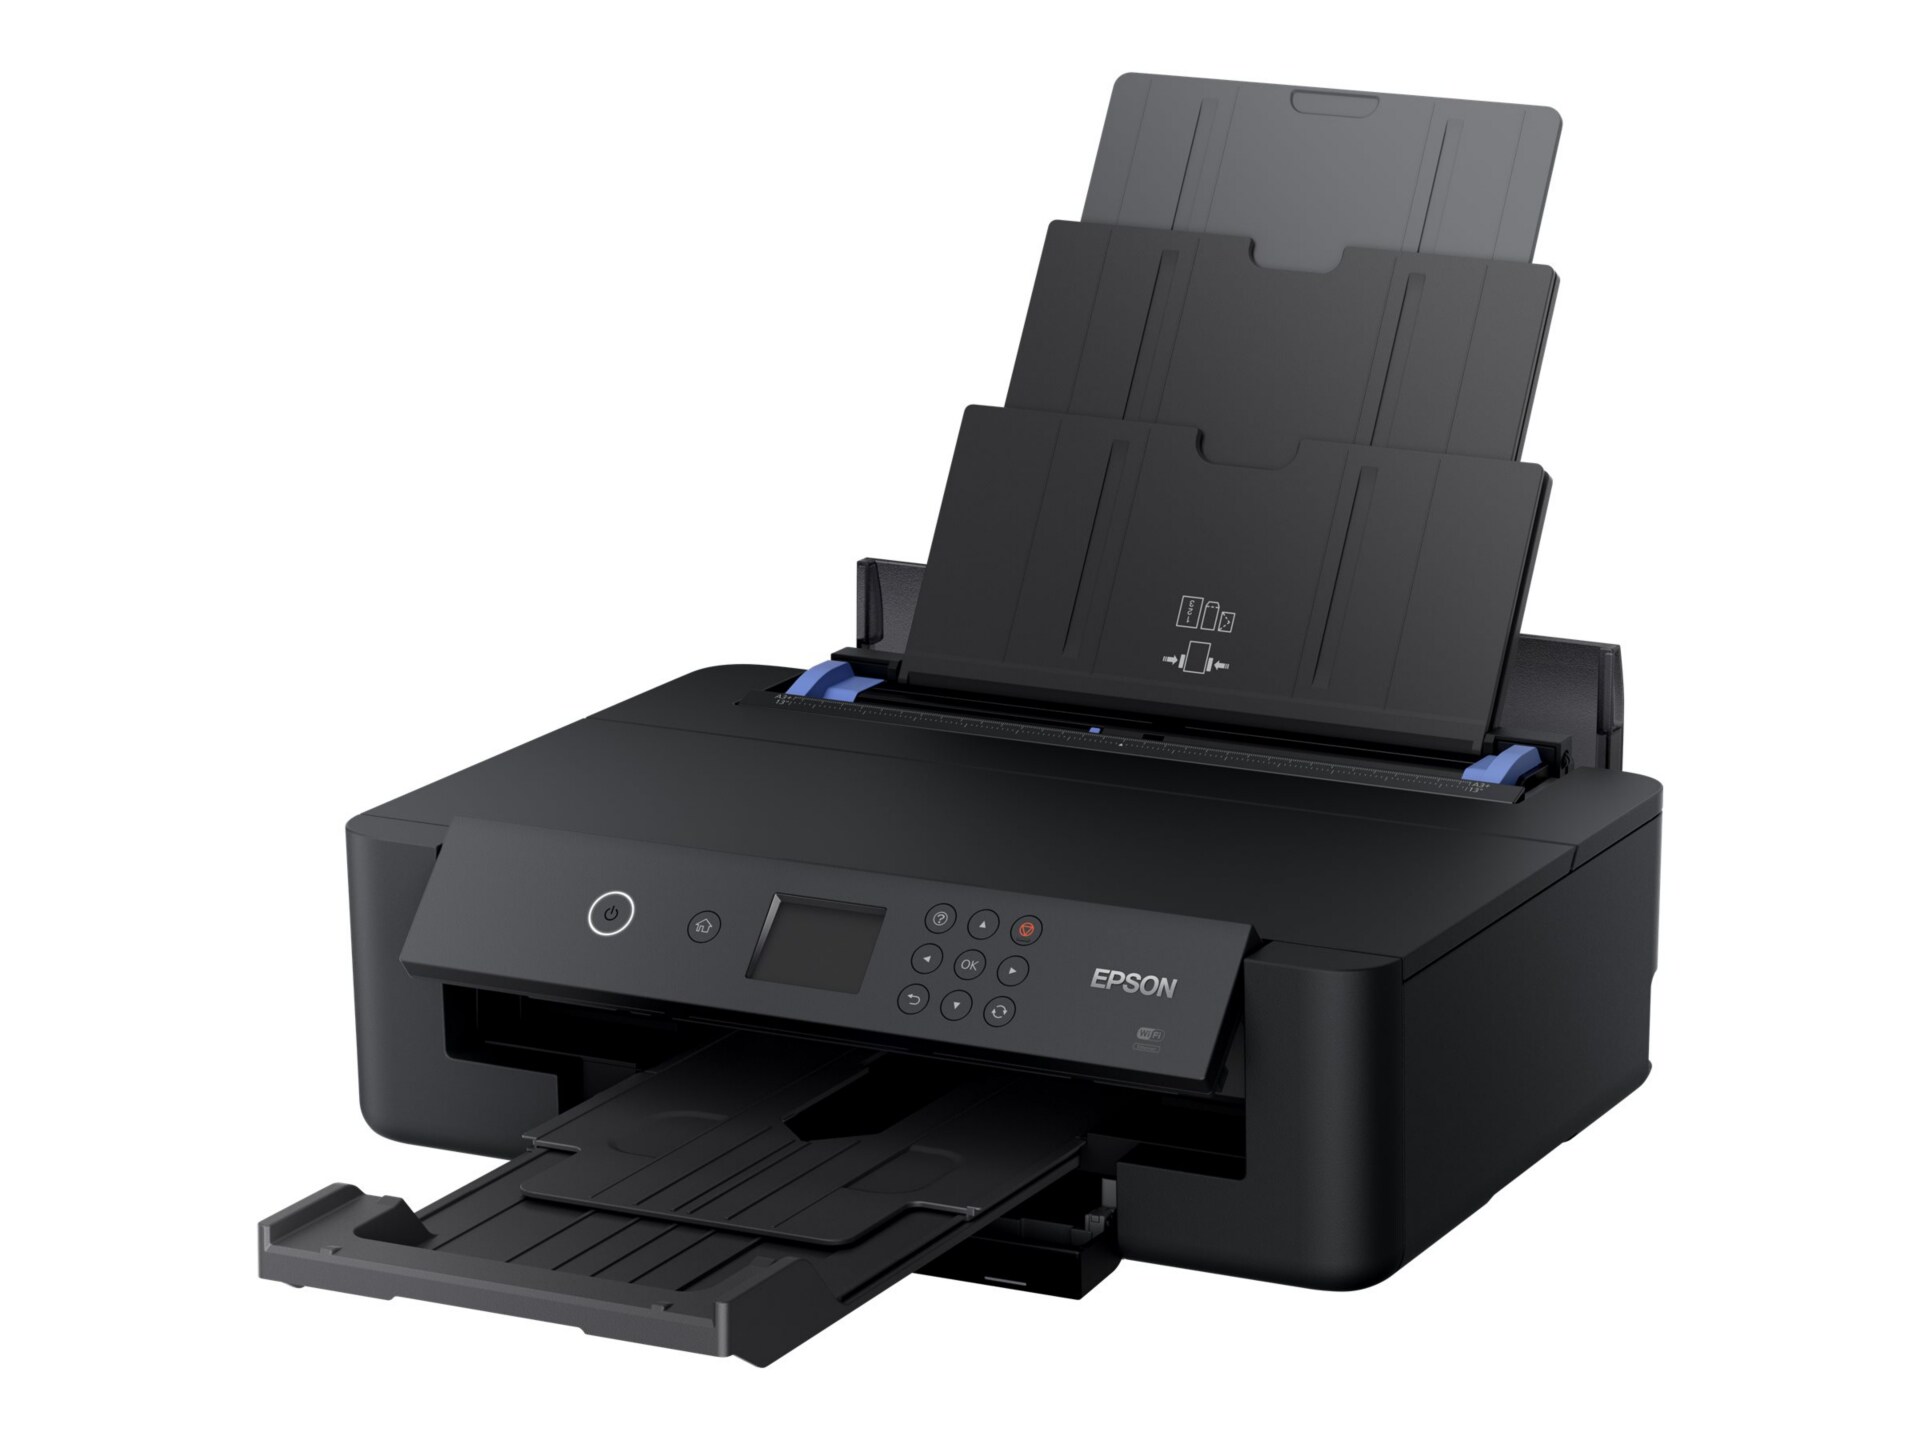 Epson Expression Home HD XP-15000 - large-format printer - color - ink-jet